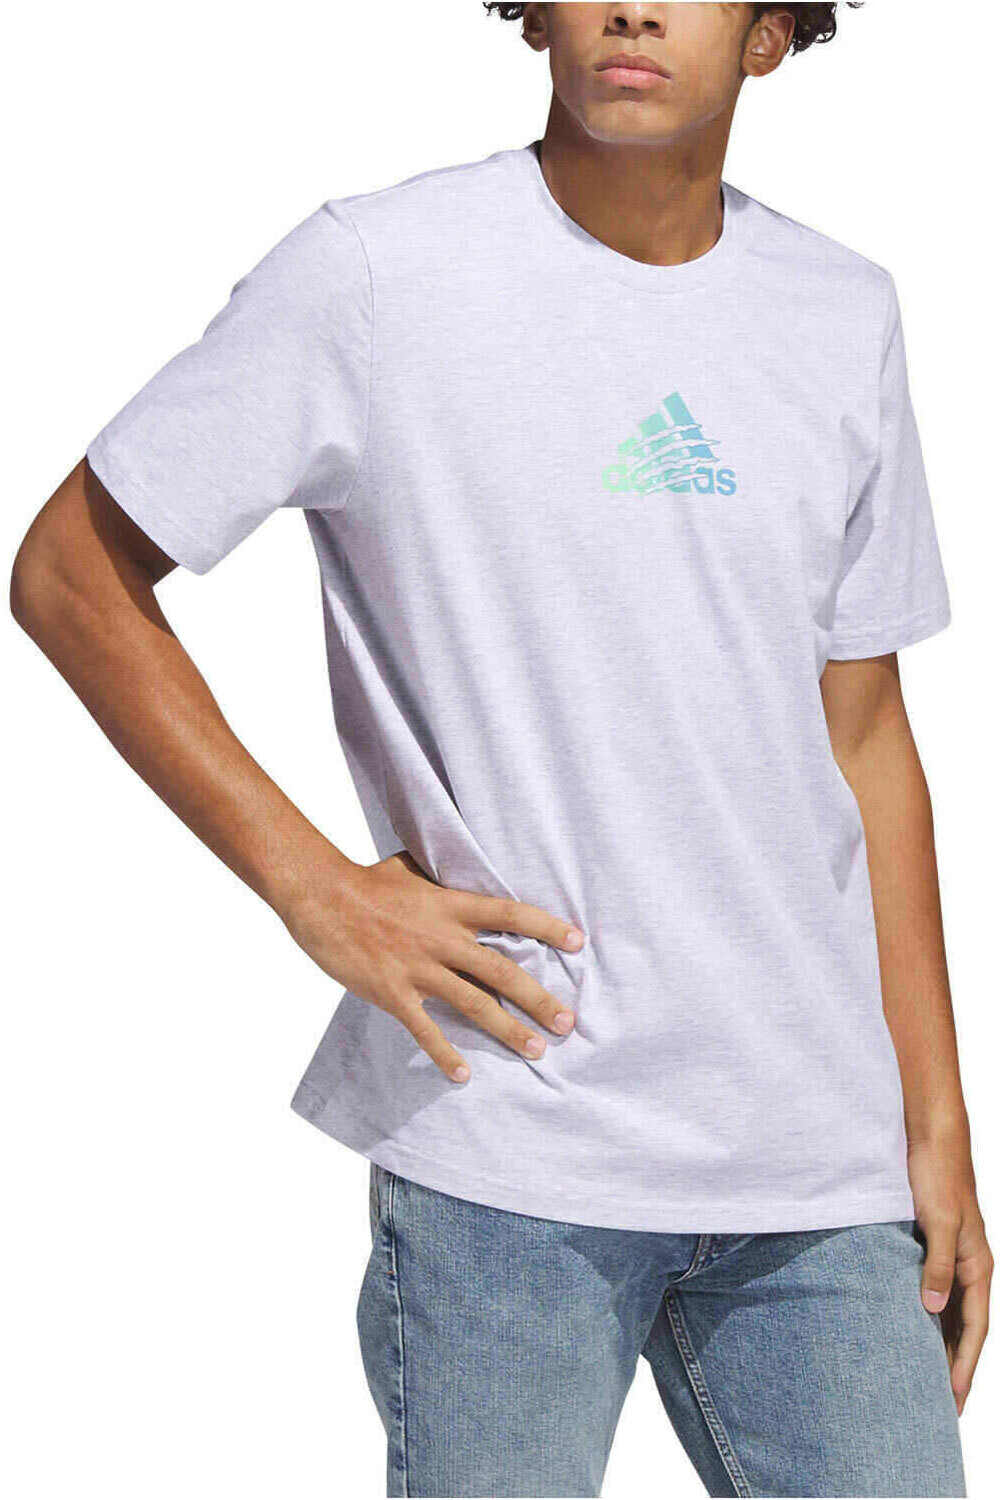 adidas camiseta manga corta hombre Power Logo Graphic vista frontal